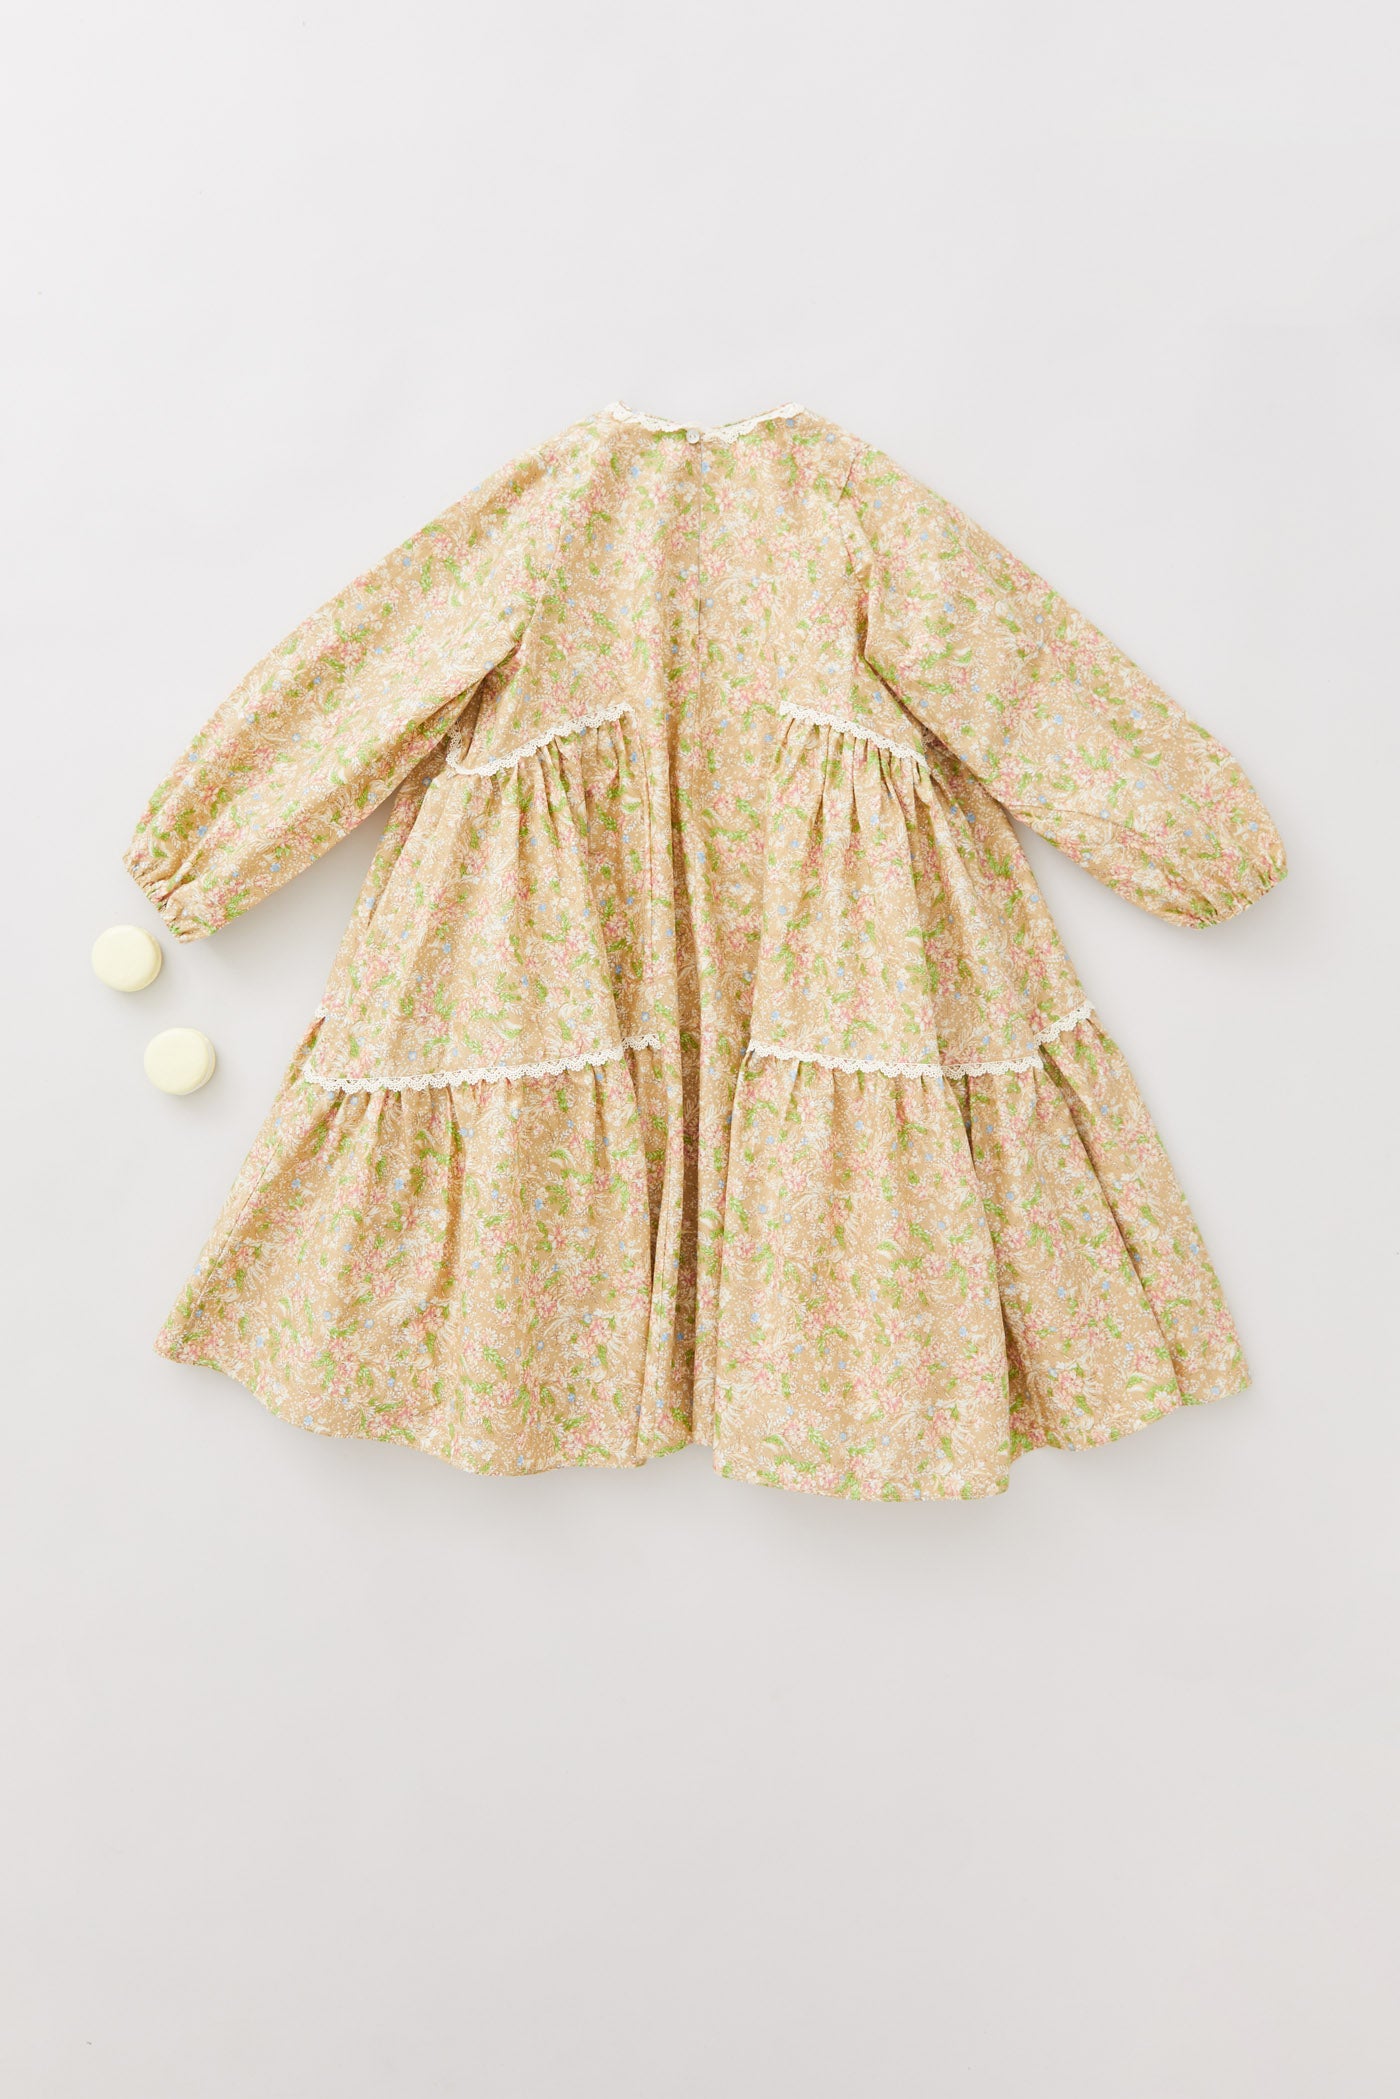 Sweet Dress In The Beige Floral Print - Designed by Ingrid Lewis - Strawberries & Cream